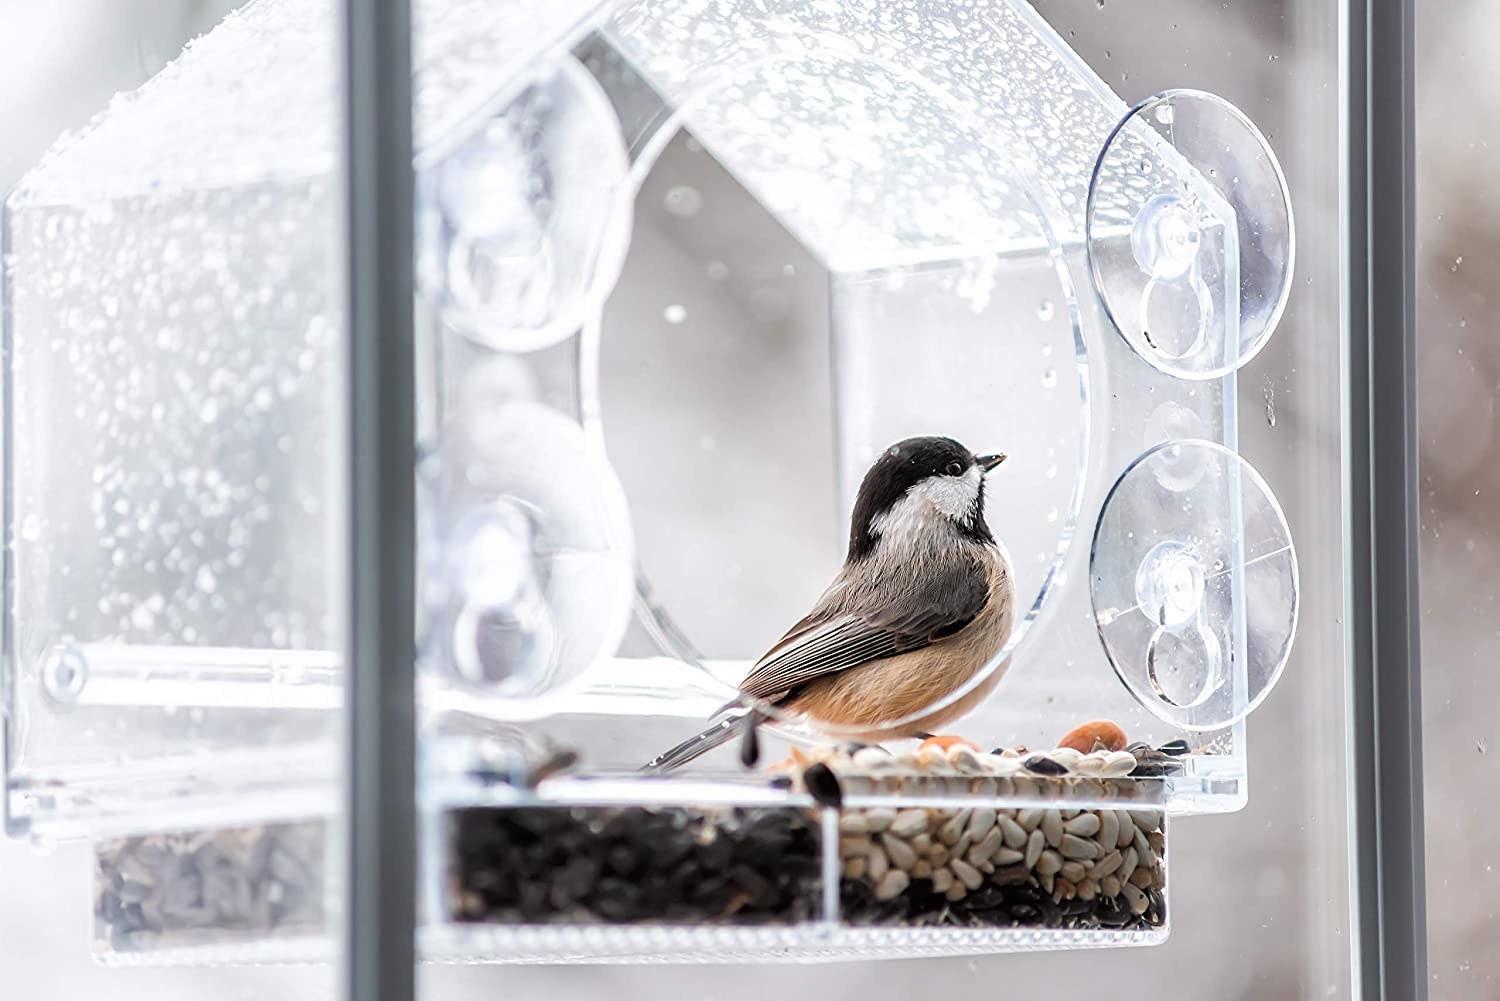 A bird inside of the birdhouse eating seeds